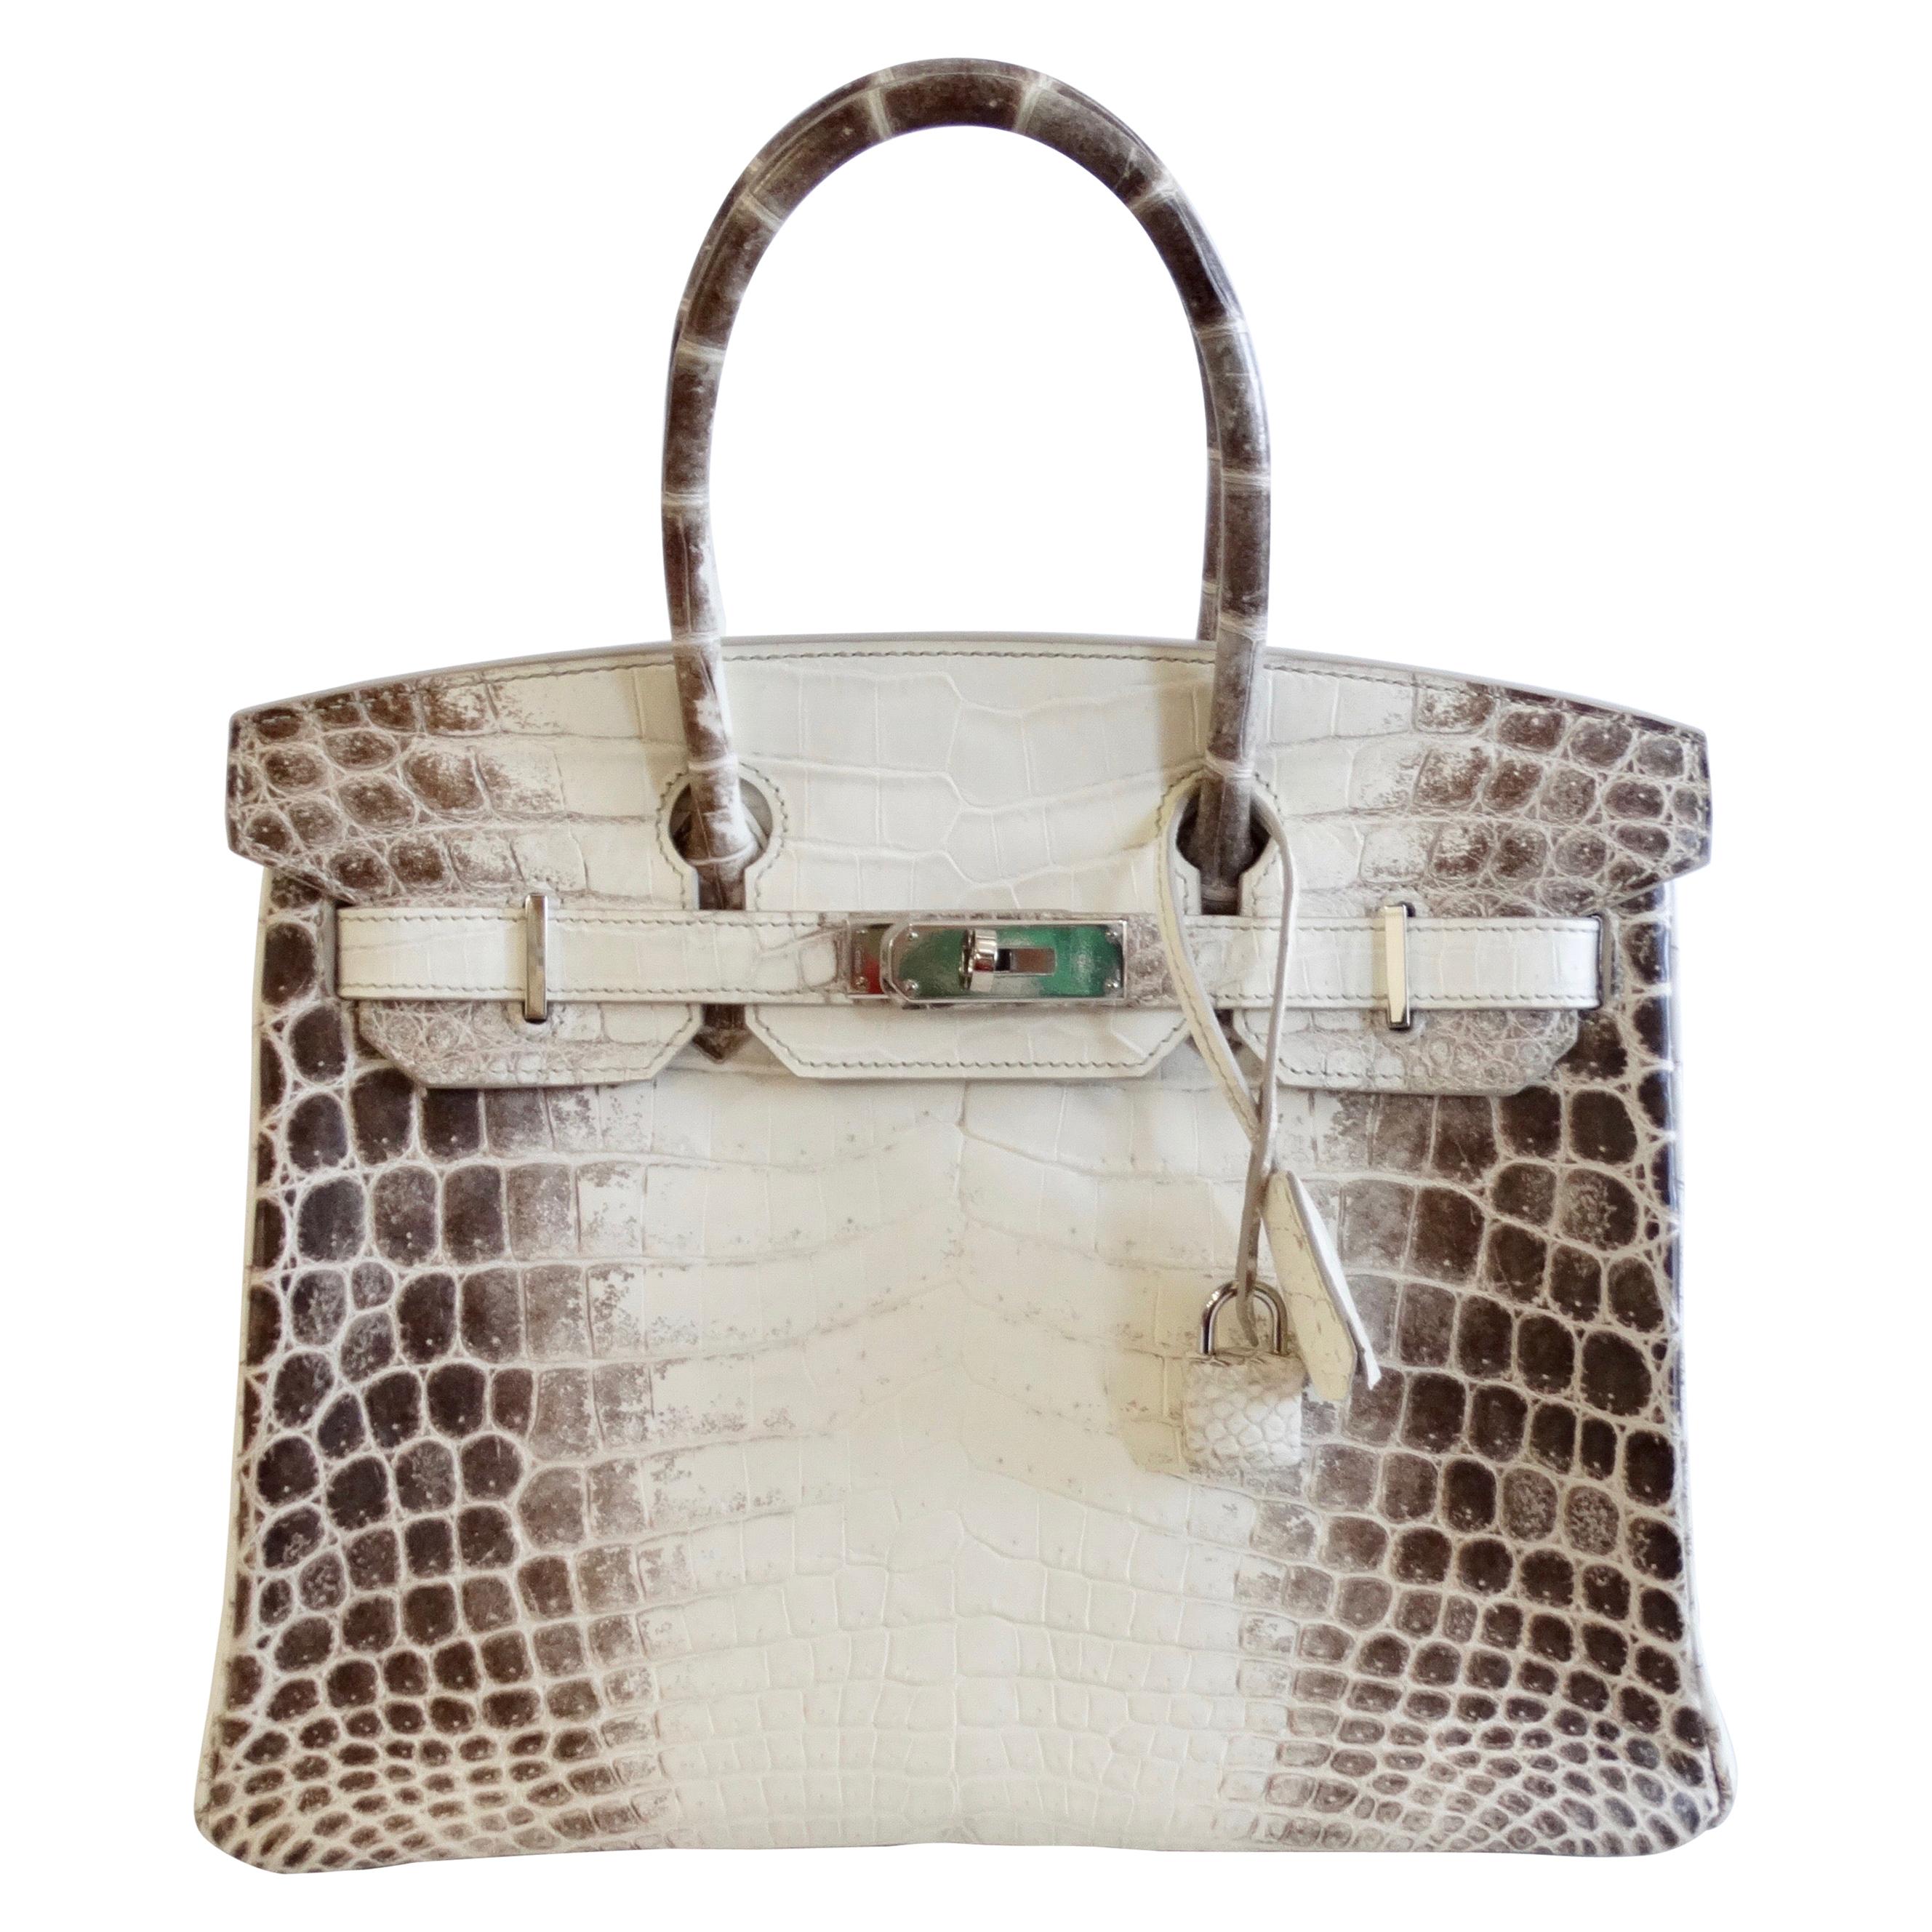 Replica Hermes Birkin 30cm Bag In Taupe Embossed Crocodile Leather